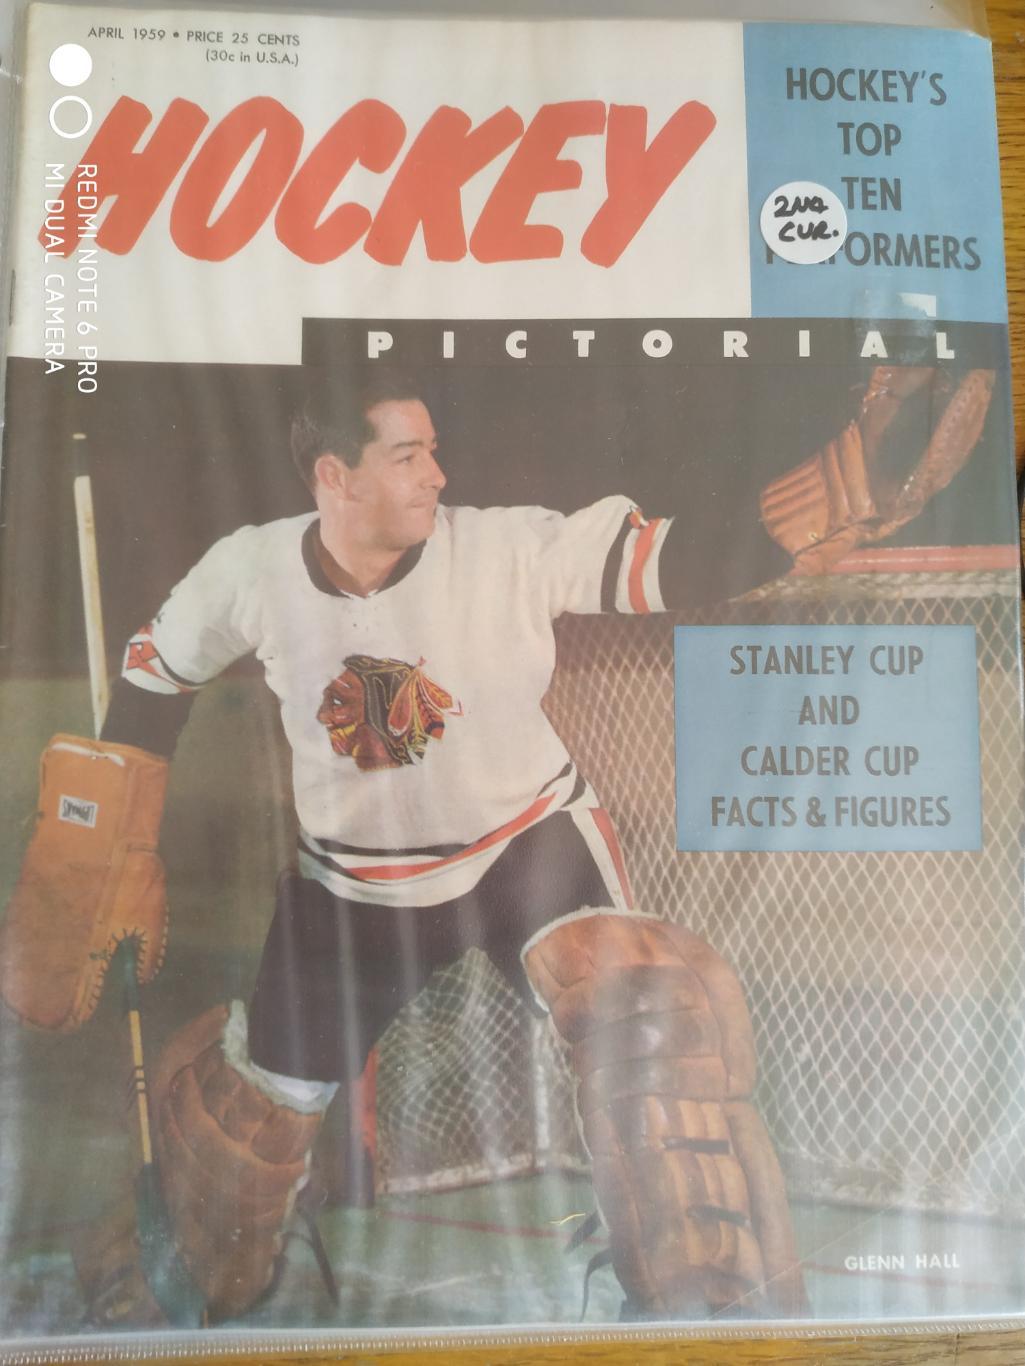 ХОККЕЙ ЖУРНАЛ ЕЖЕМЕСЯЧНИК НХЛ NHL 1959 APR HOCKEY PICTORIAL